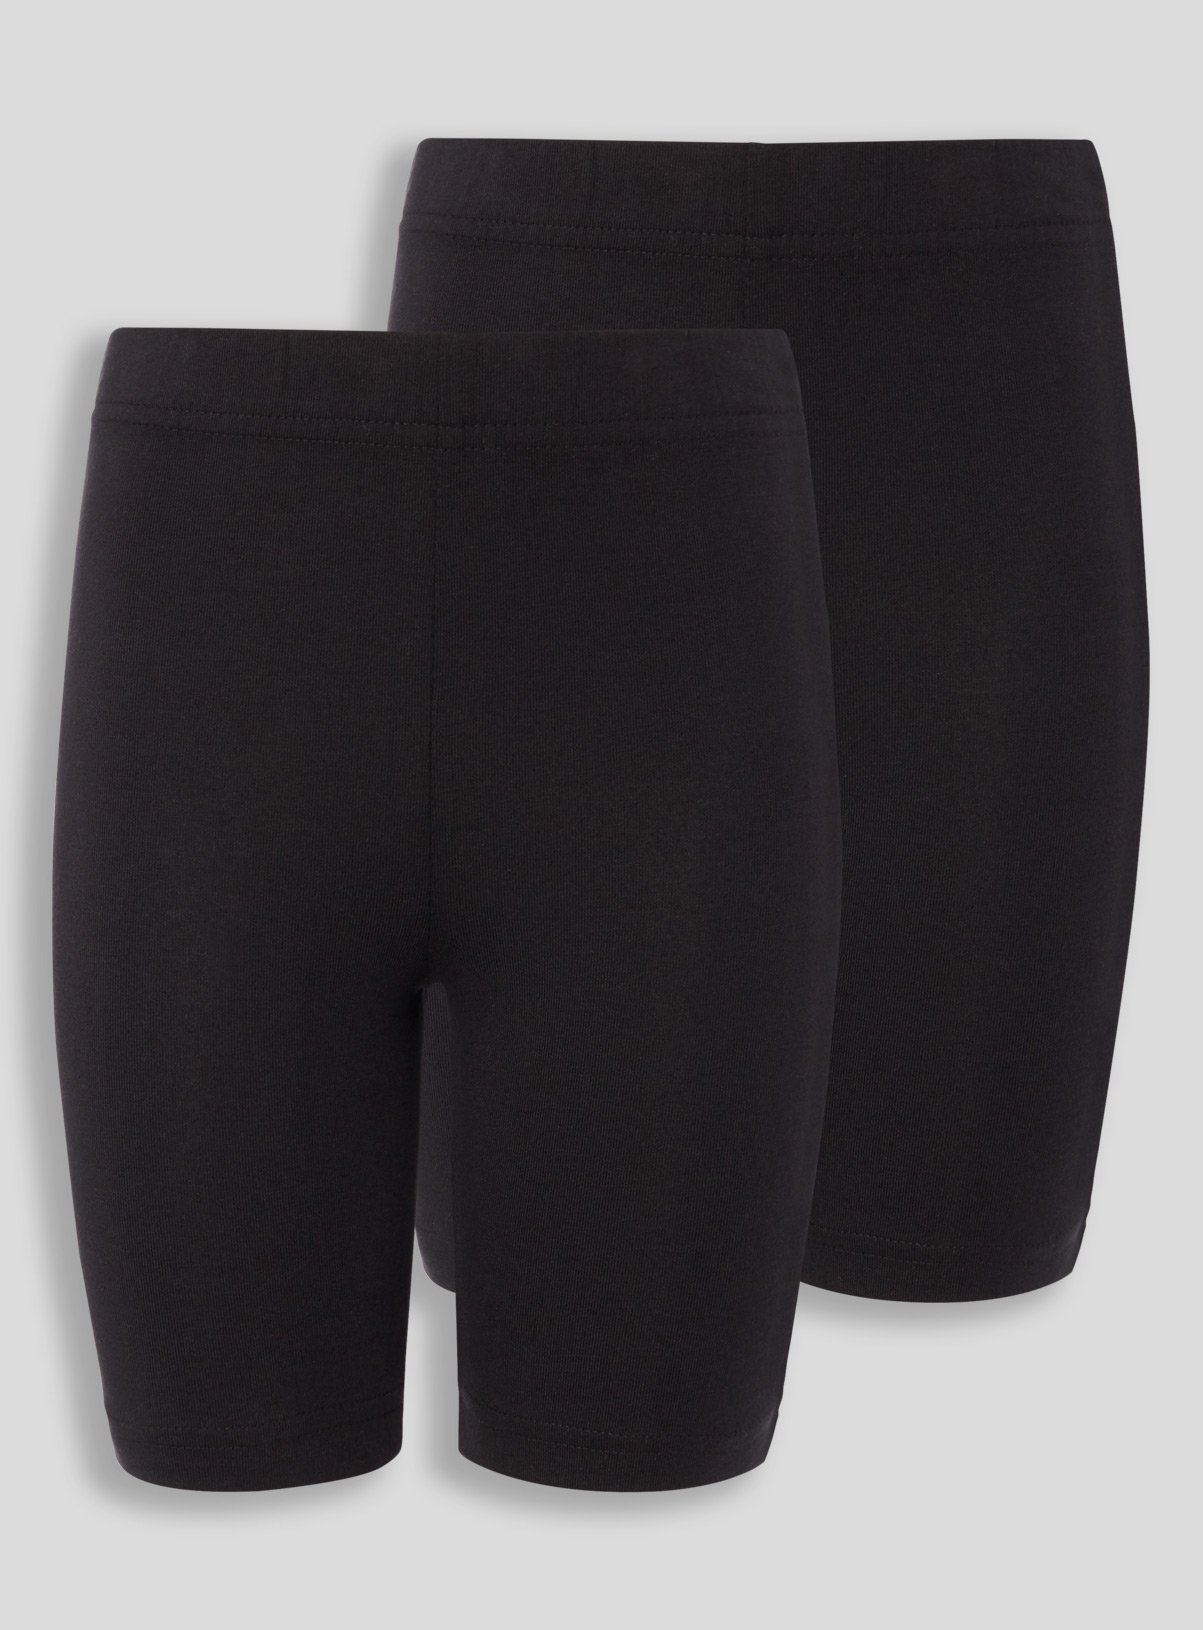 black cycle shorts ladies